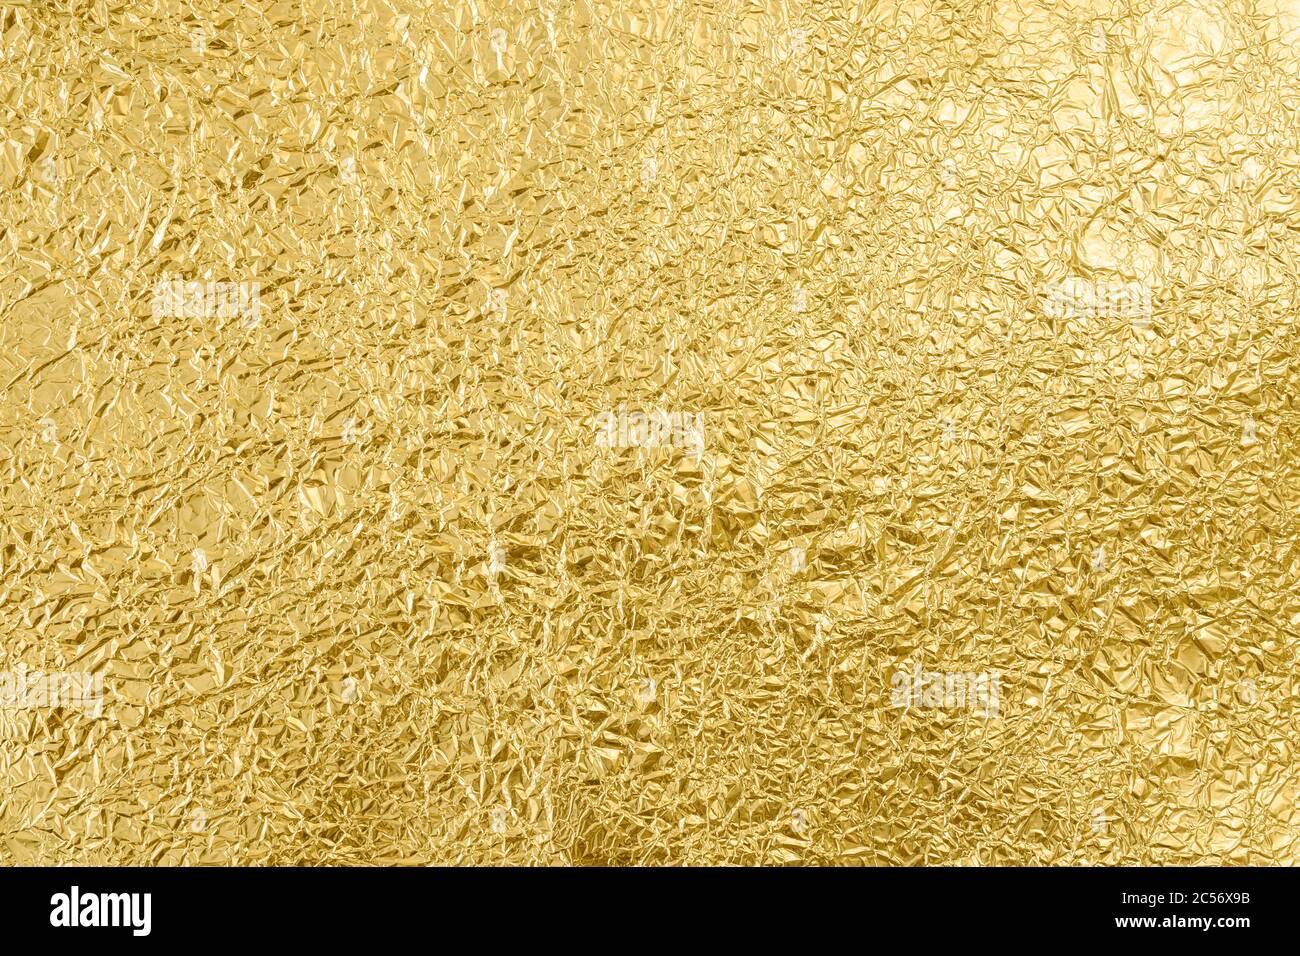 Premium Photo  Full frame take of a sheet of crumpled gold